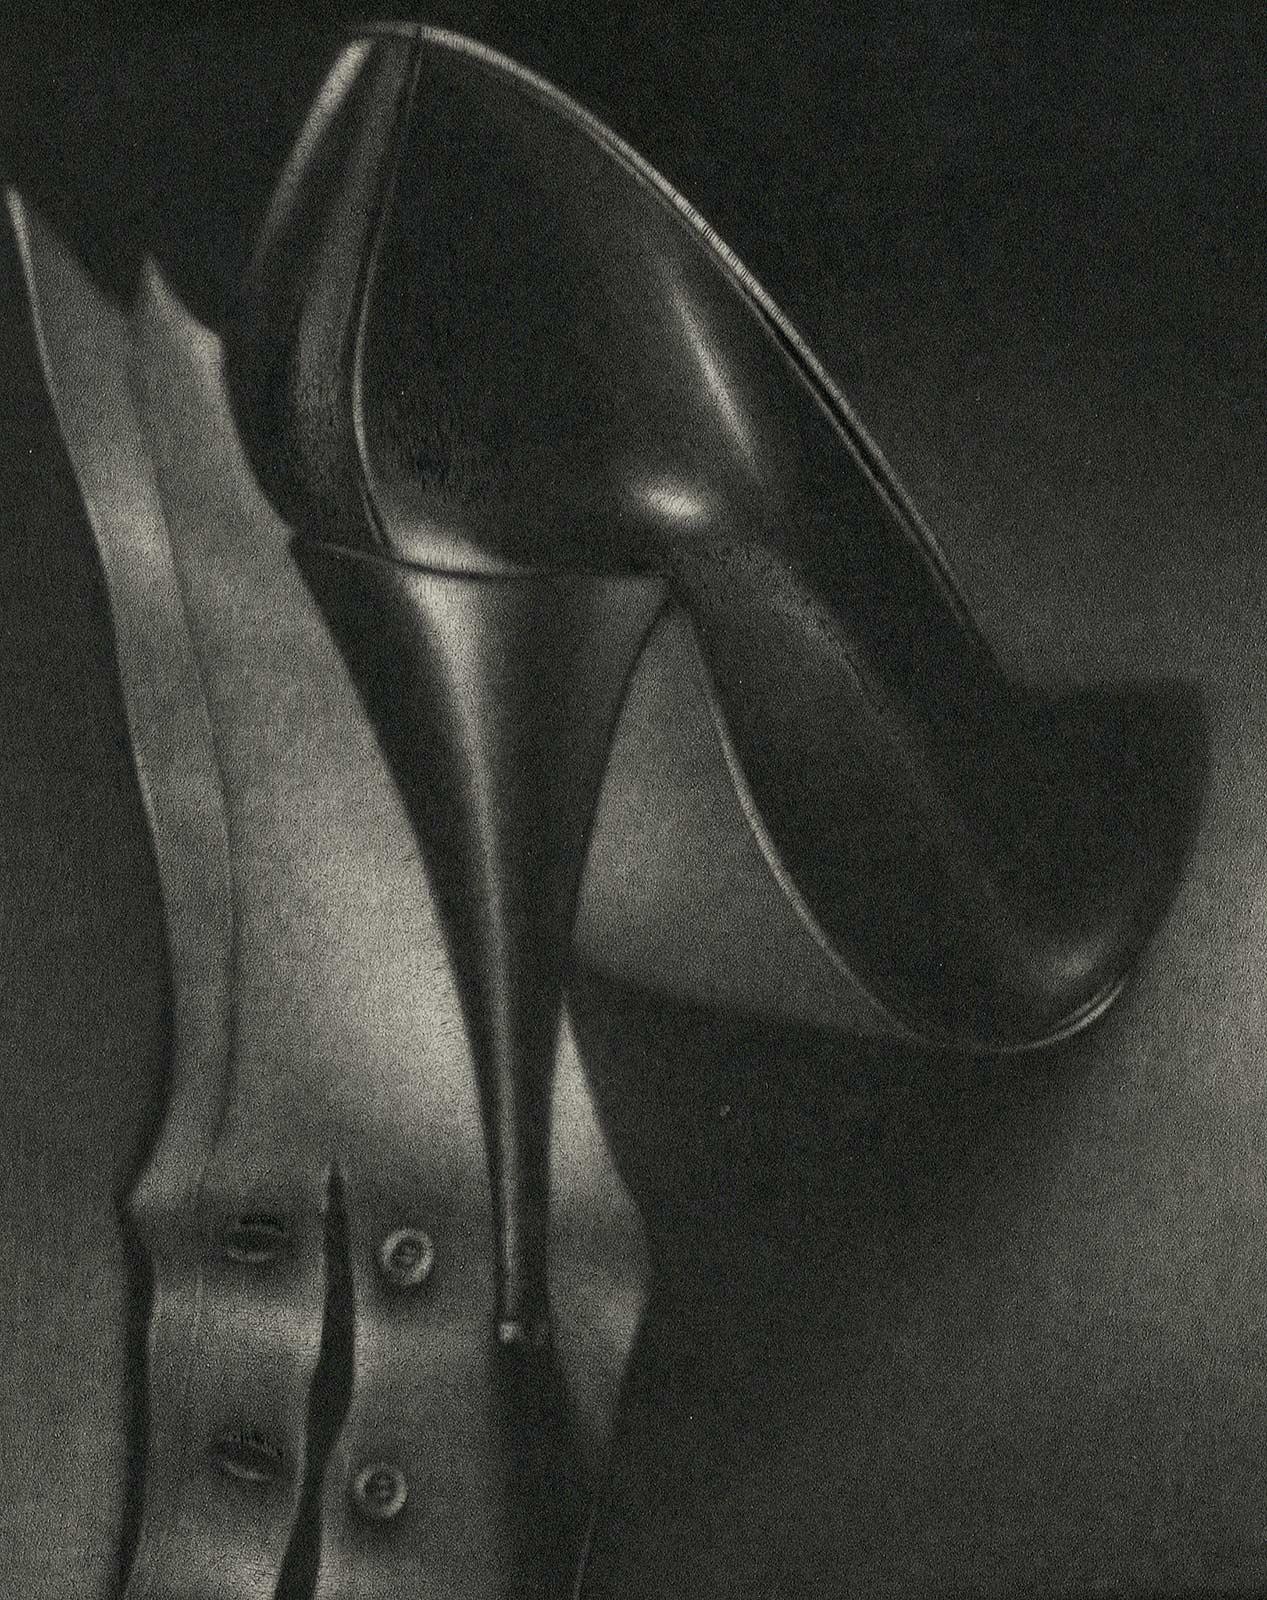 Le Talon Aigviille  (Marlene Dietrich's Stiletto Heel - In time for PRIDE) - Print de Laurent Schkolnyk